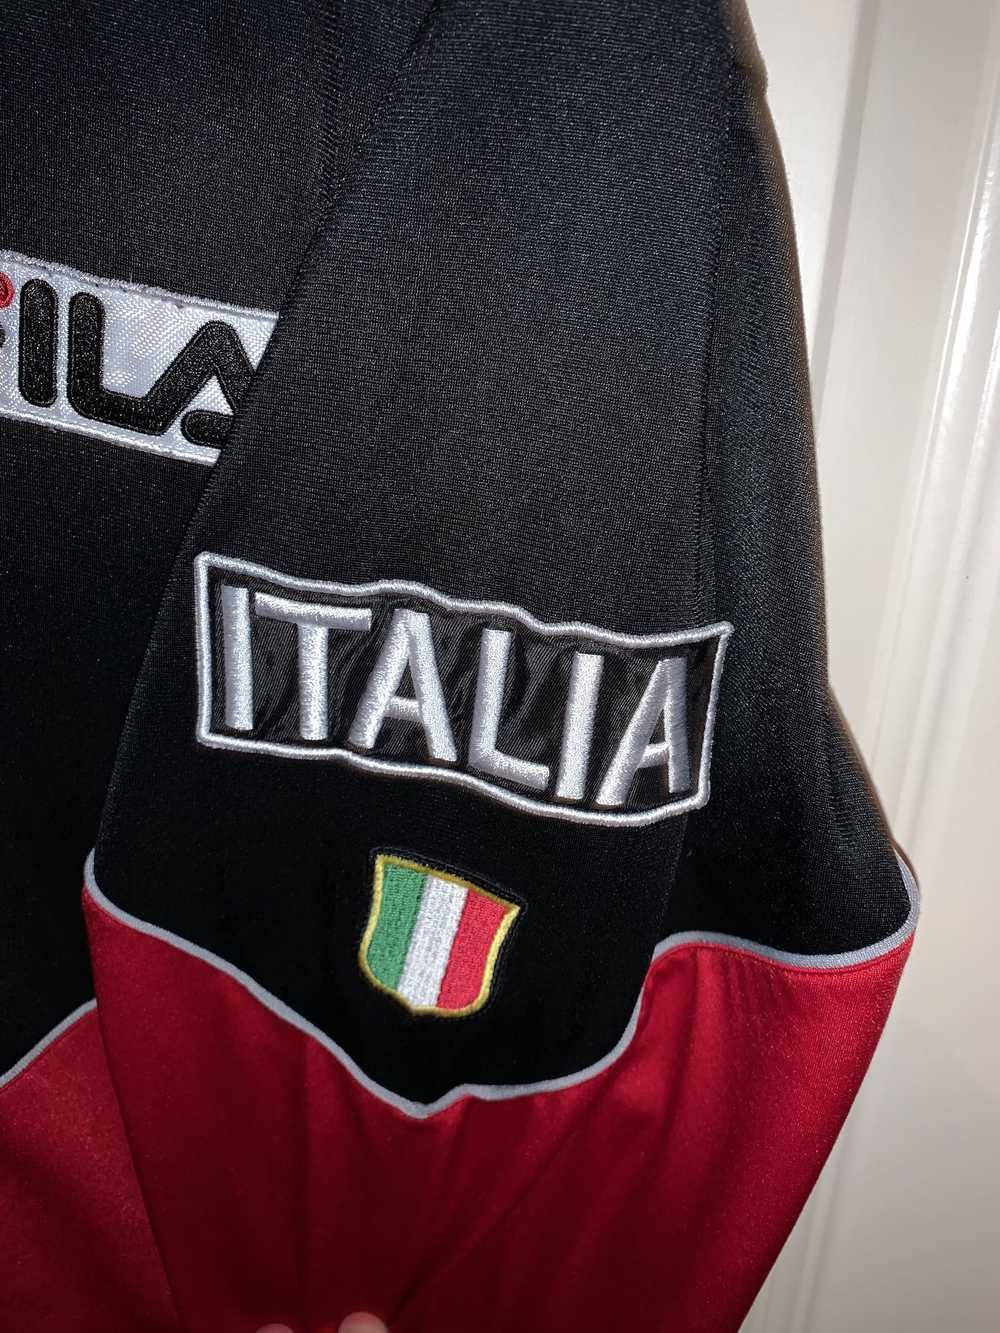 Fila Fila Sport Italia Jacket - image 3